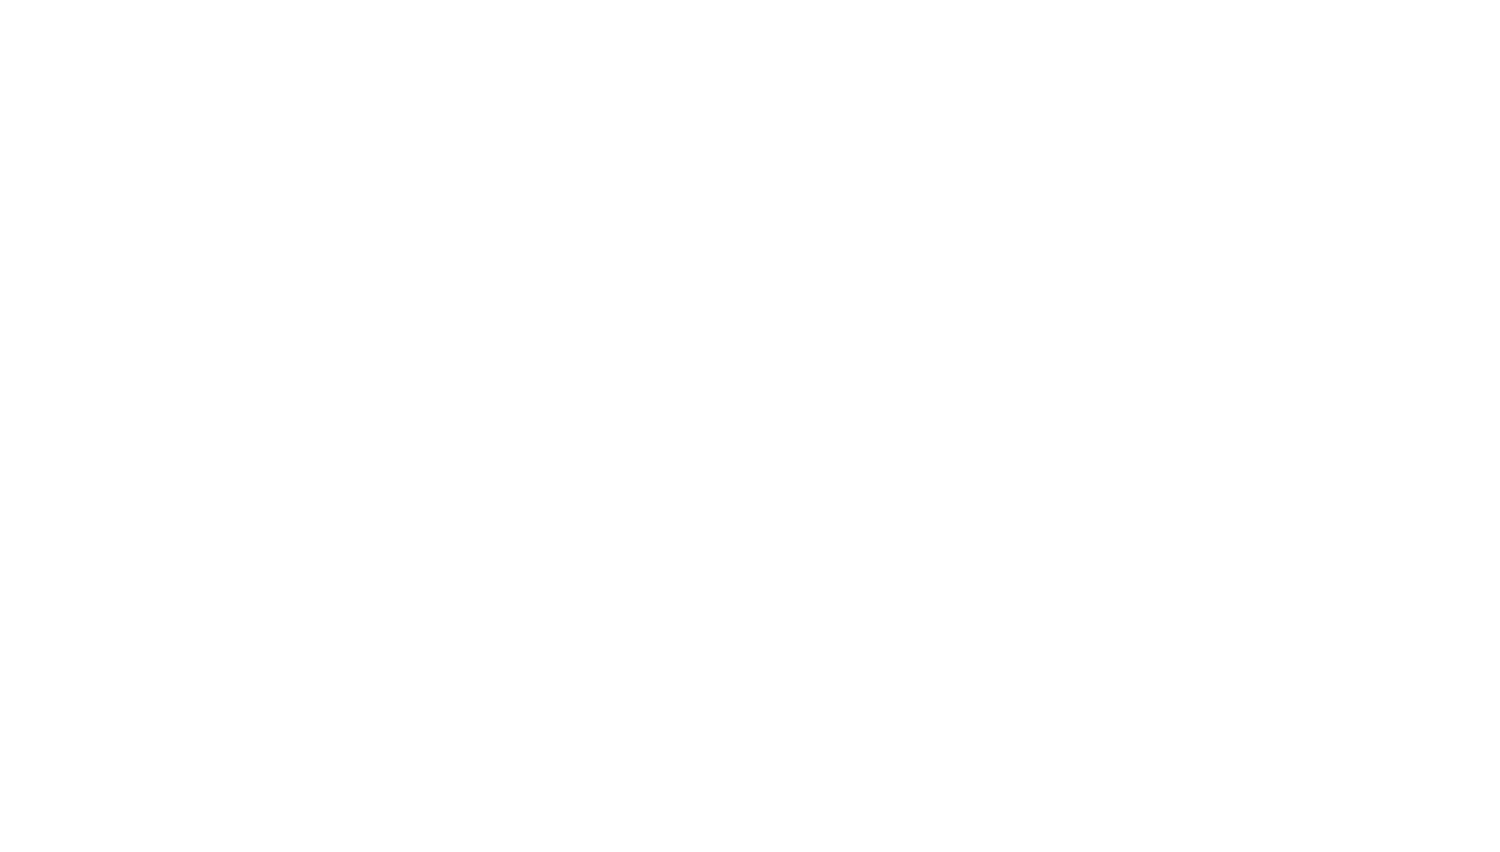 Courthouse Logo - The Courthouse